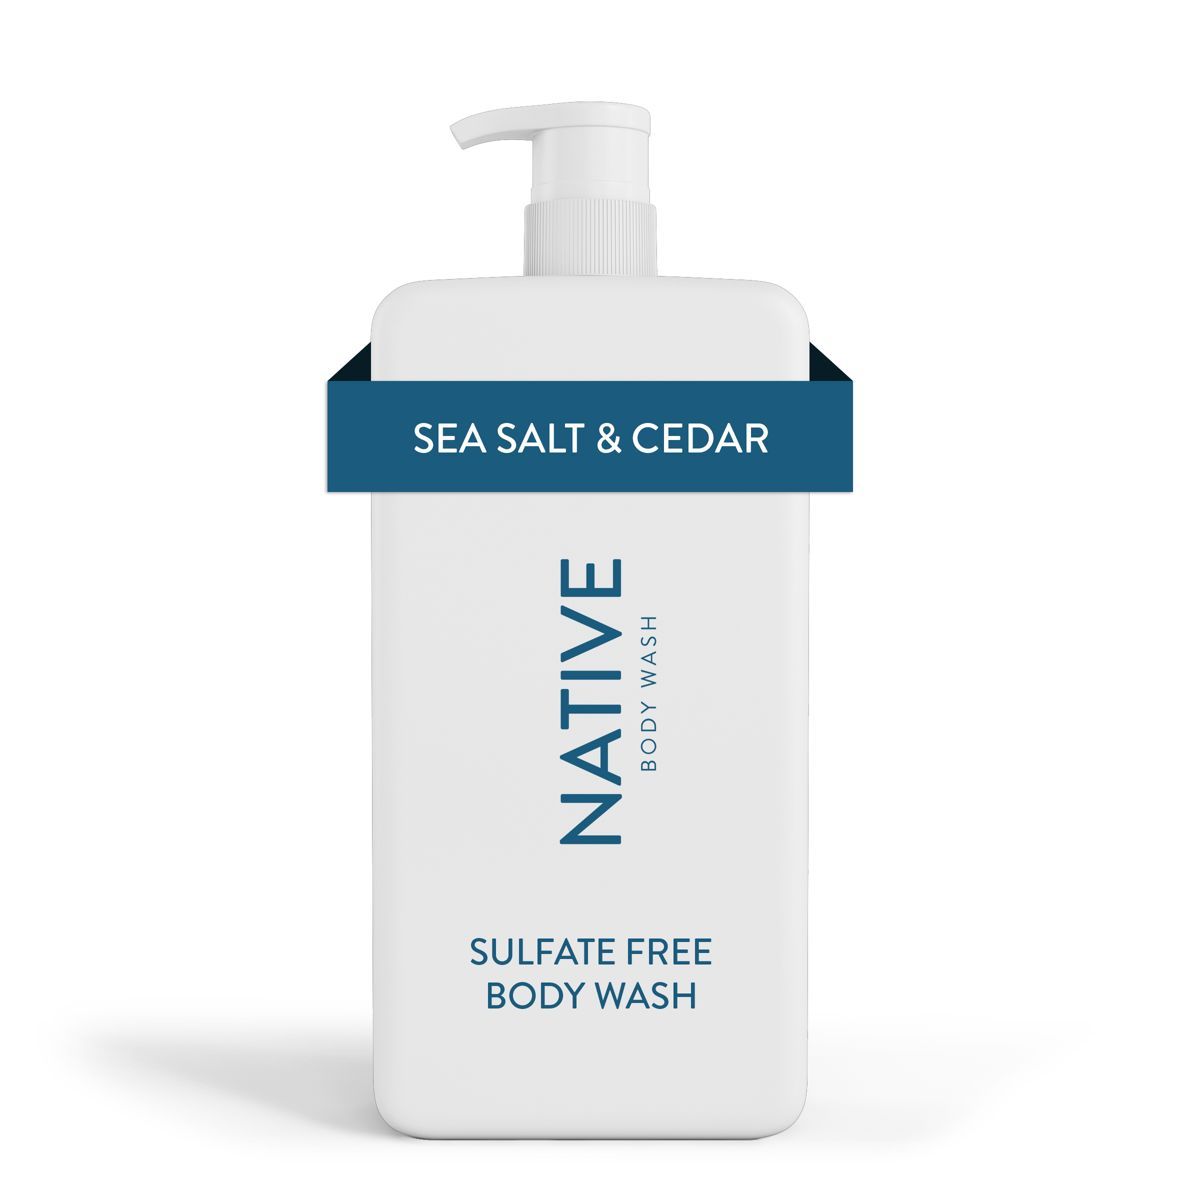 Native Body Wash with Pump - Sea Salt & Cedar - Sulfate Free - 36 fl oz | Target